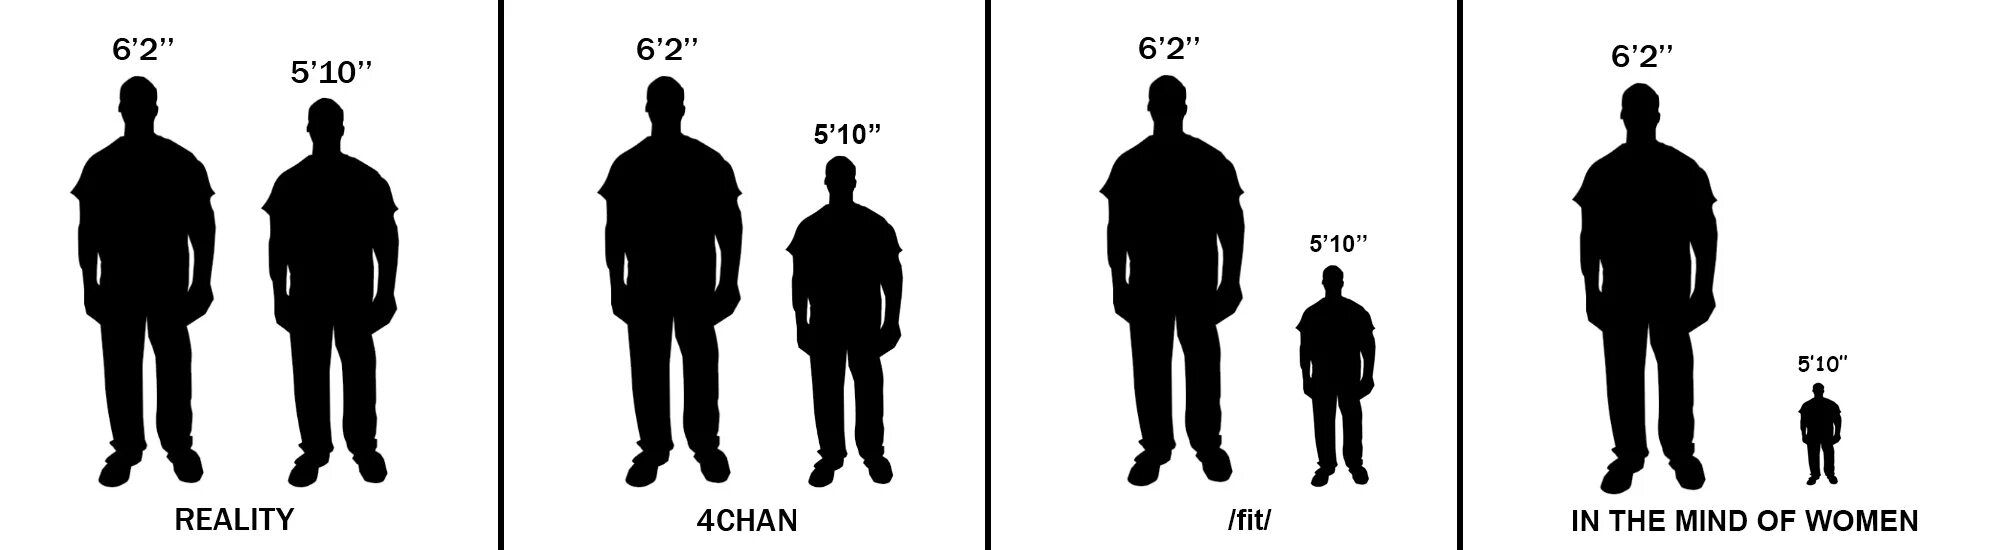 3 5 and 6 6 true. Разница в росте 5 см. Height 5 11 в сантиметрах. 5 11 Рост. 6.0 Рост.